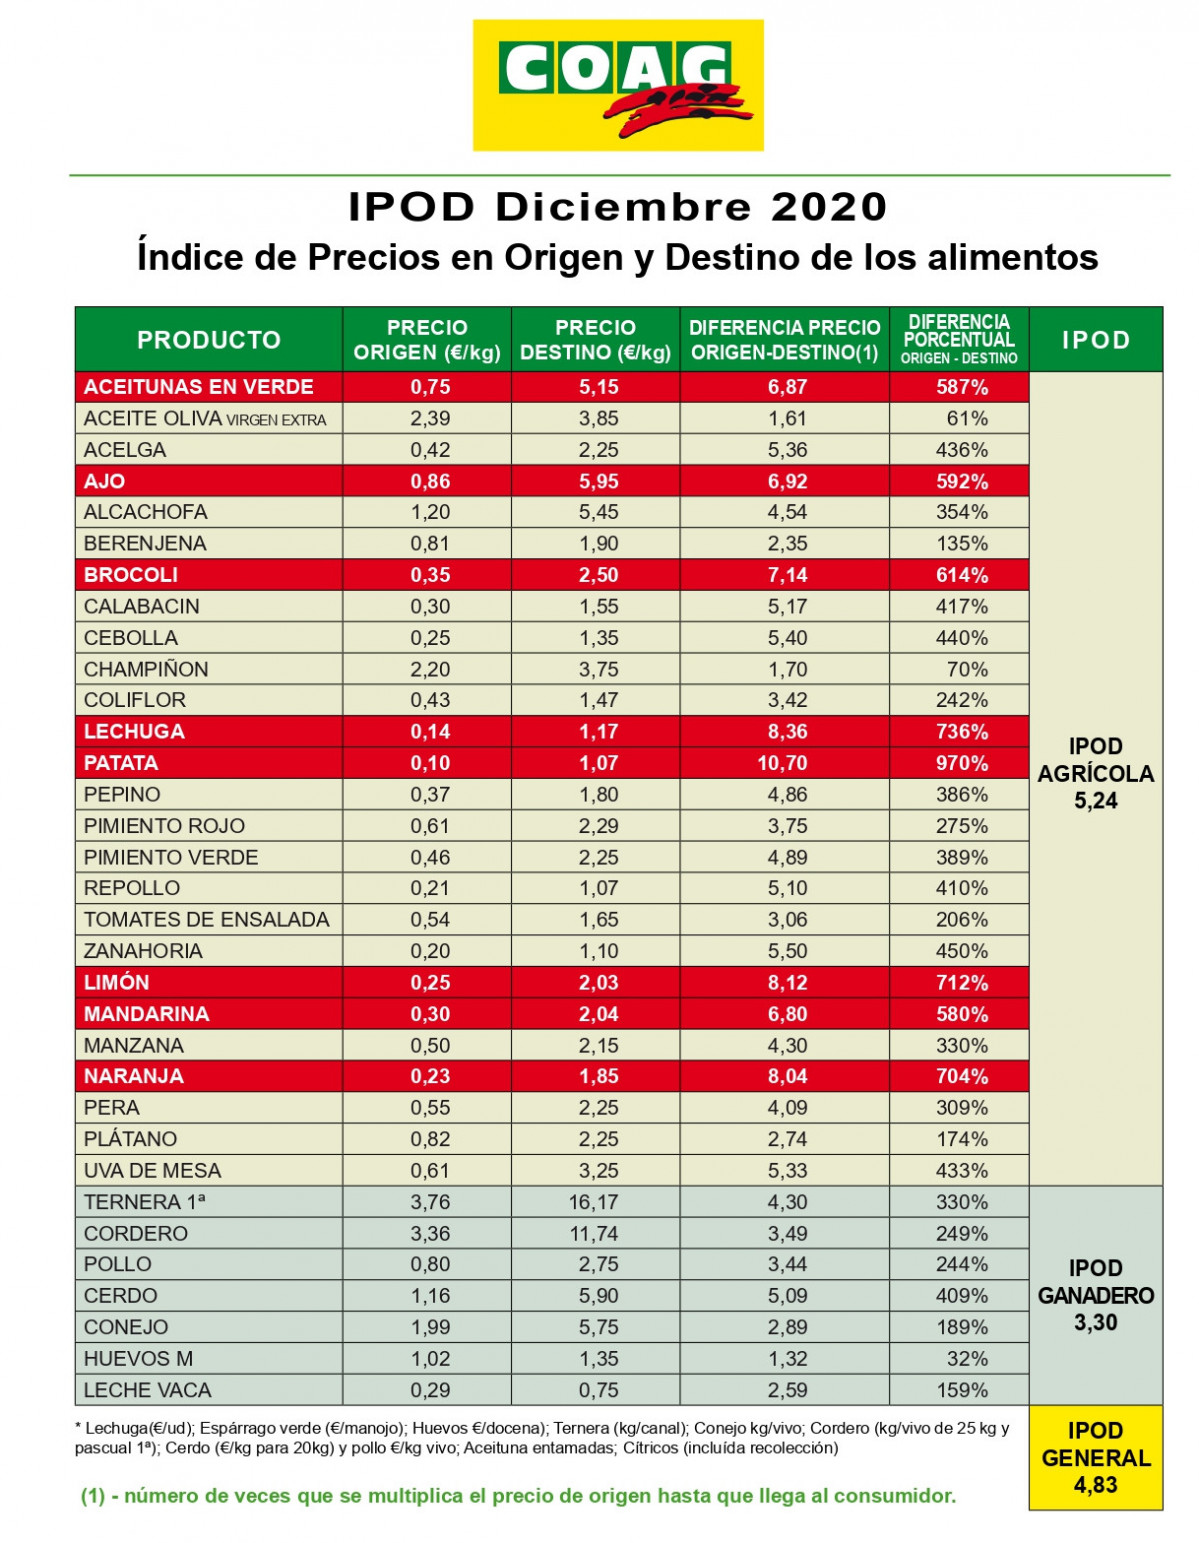 IPOD dic 2020 (Tabla COAG)